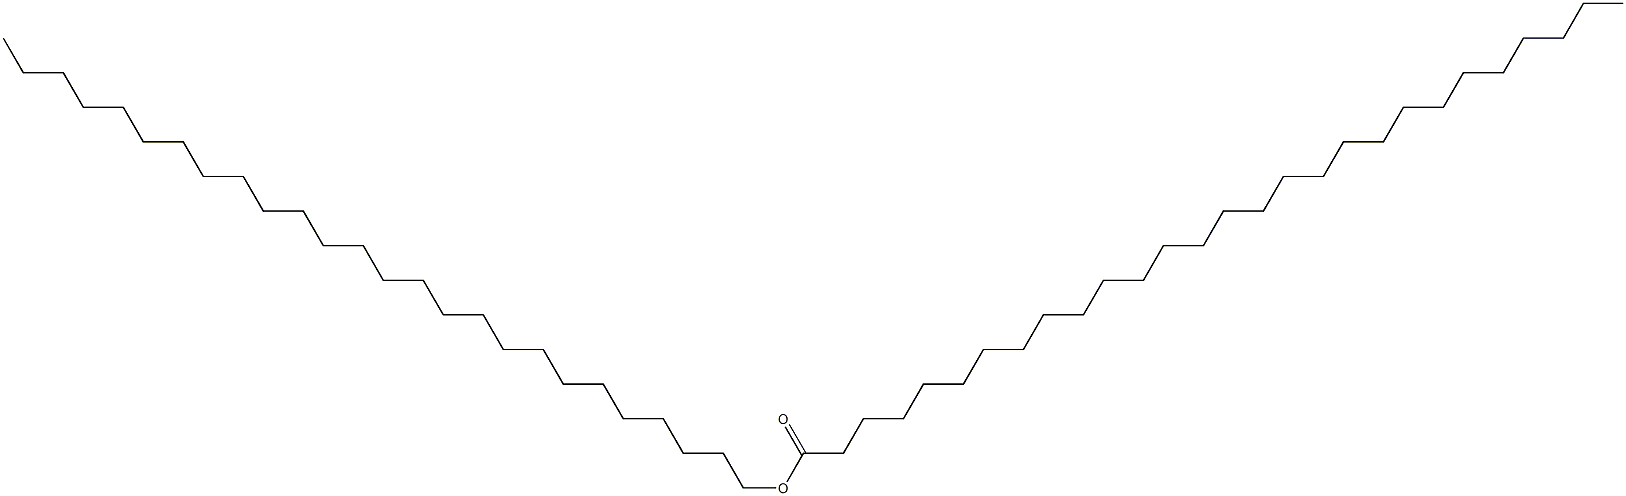 Octacosanoic acid hexacosyl ester